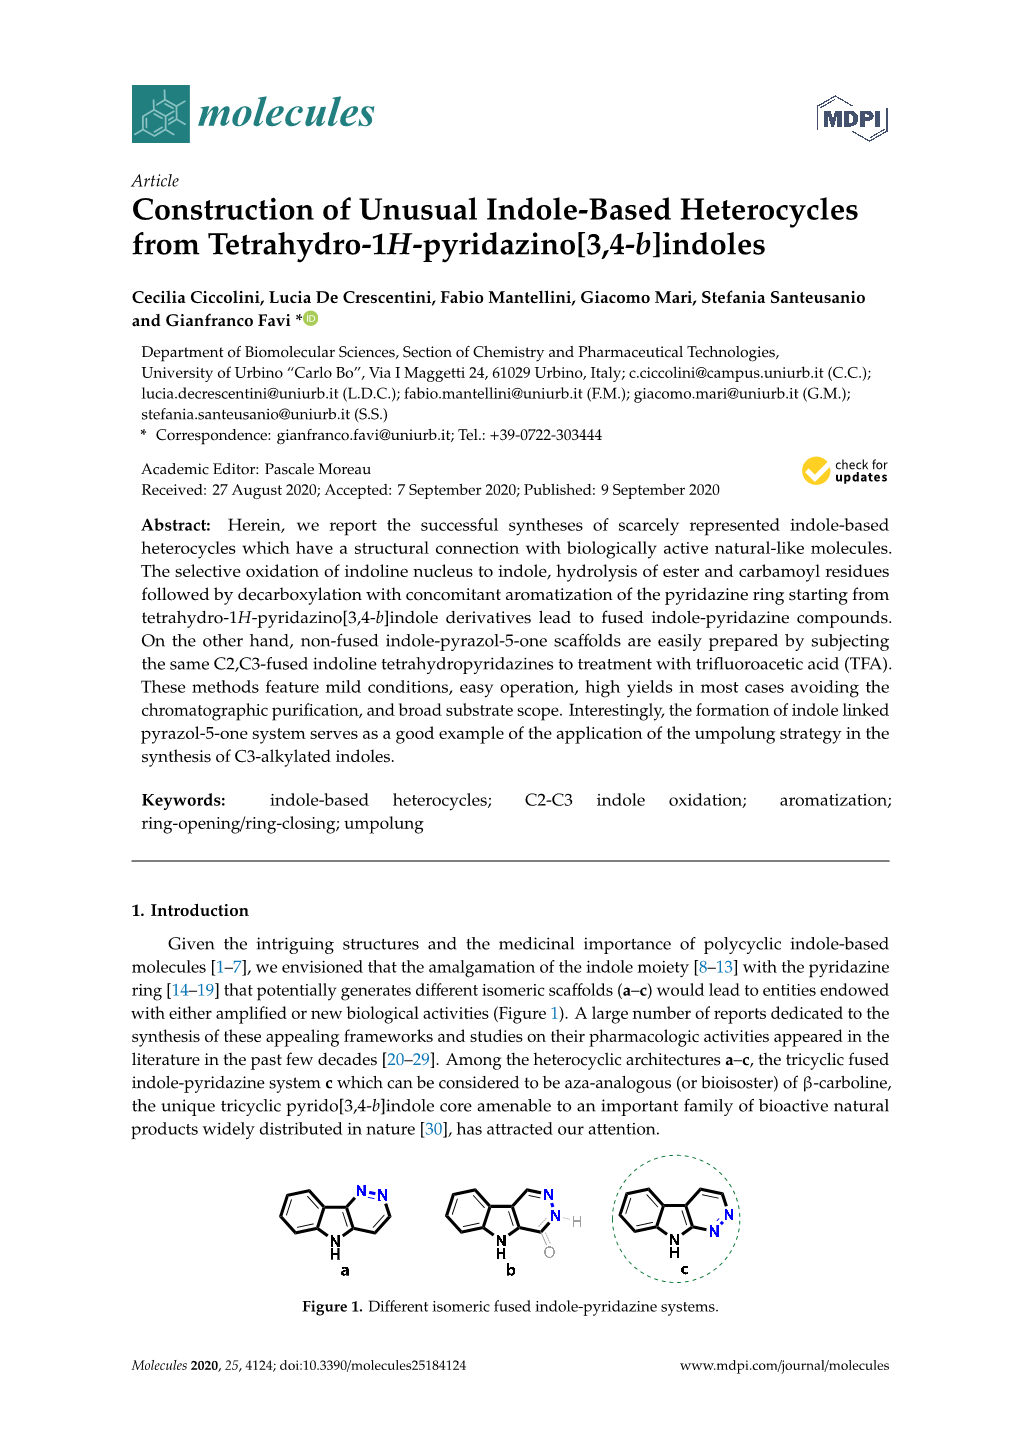 Construction of Unusual Indole-Based Heterocycles from Tetrahydro-1H-Pyridazino[3,4-B]Indoles